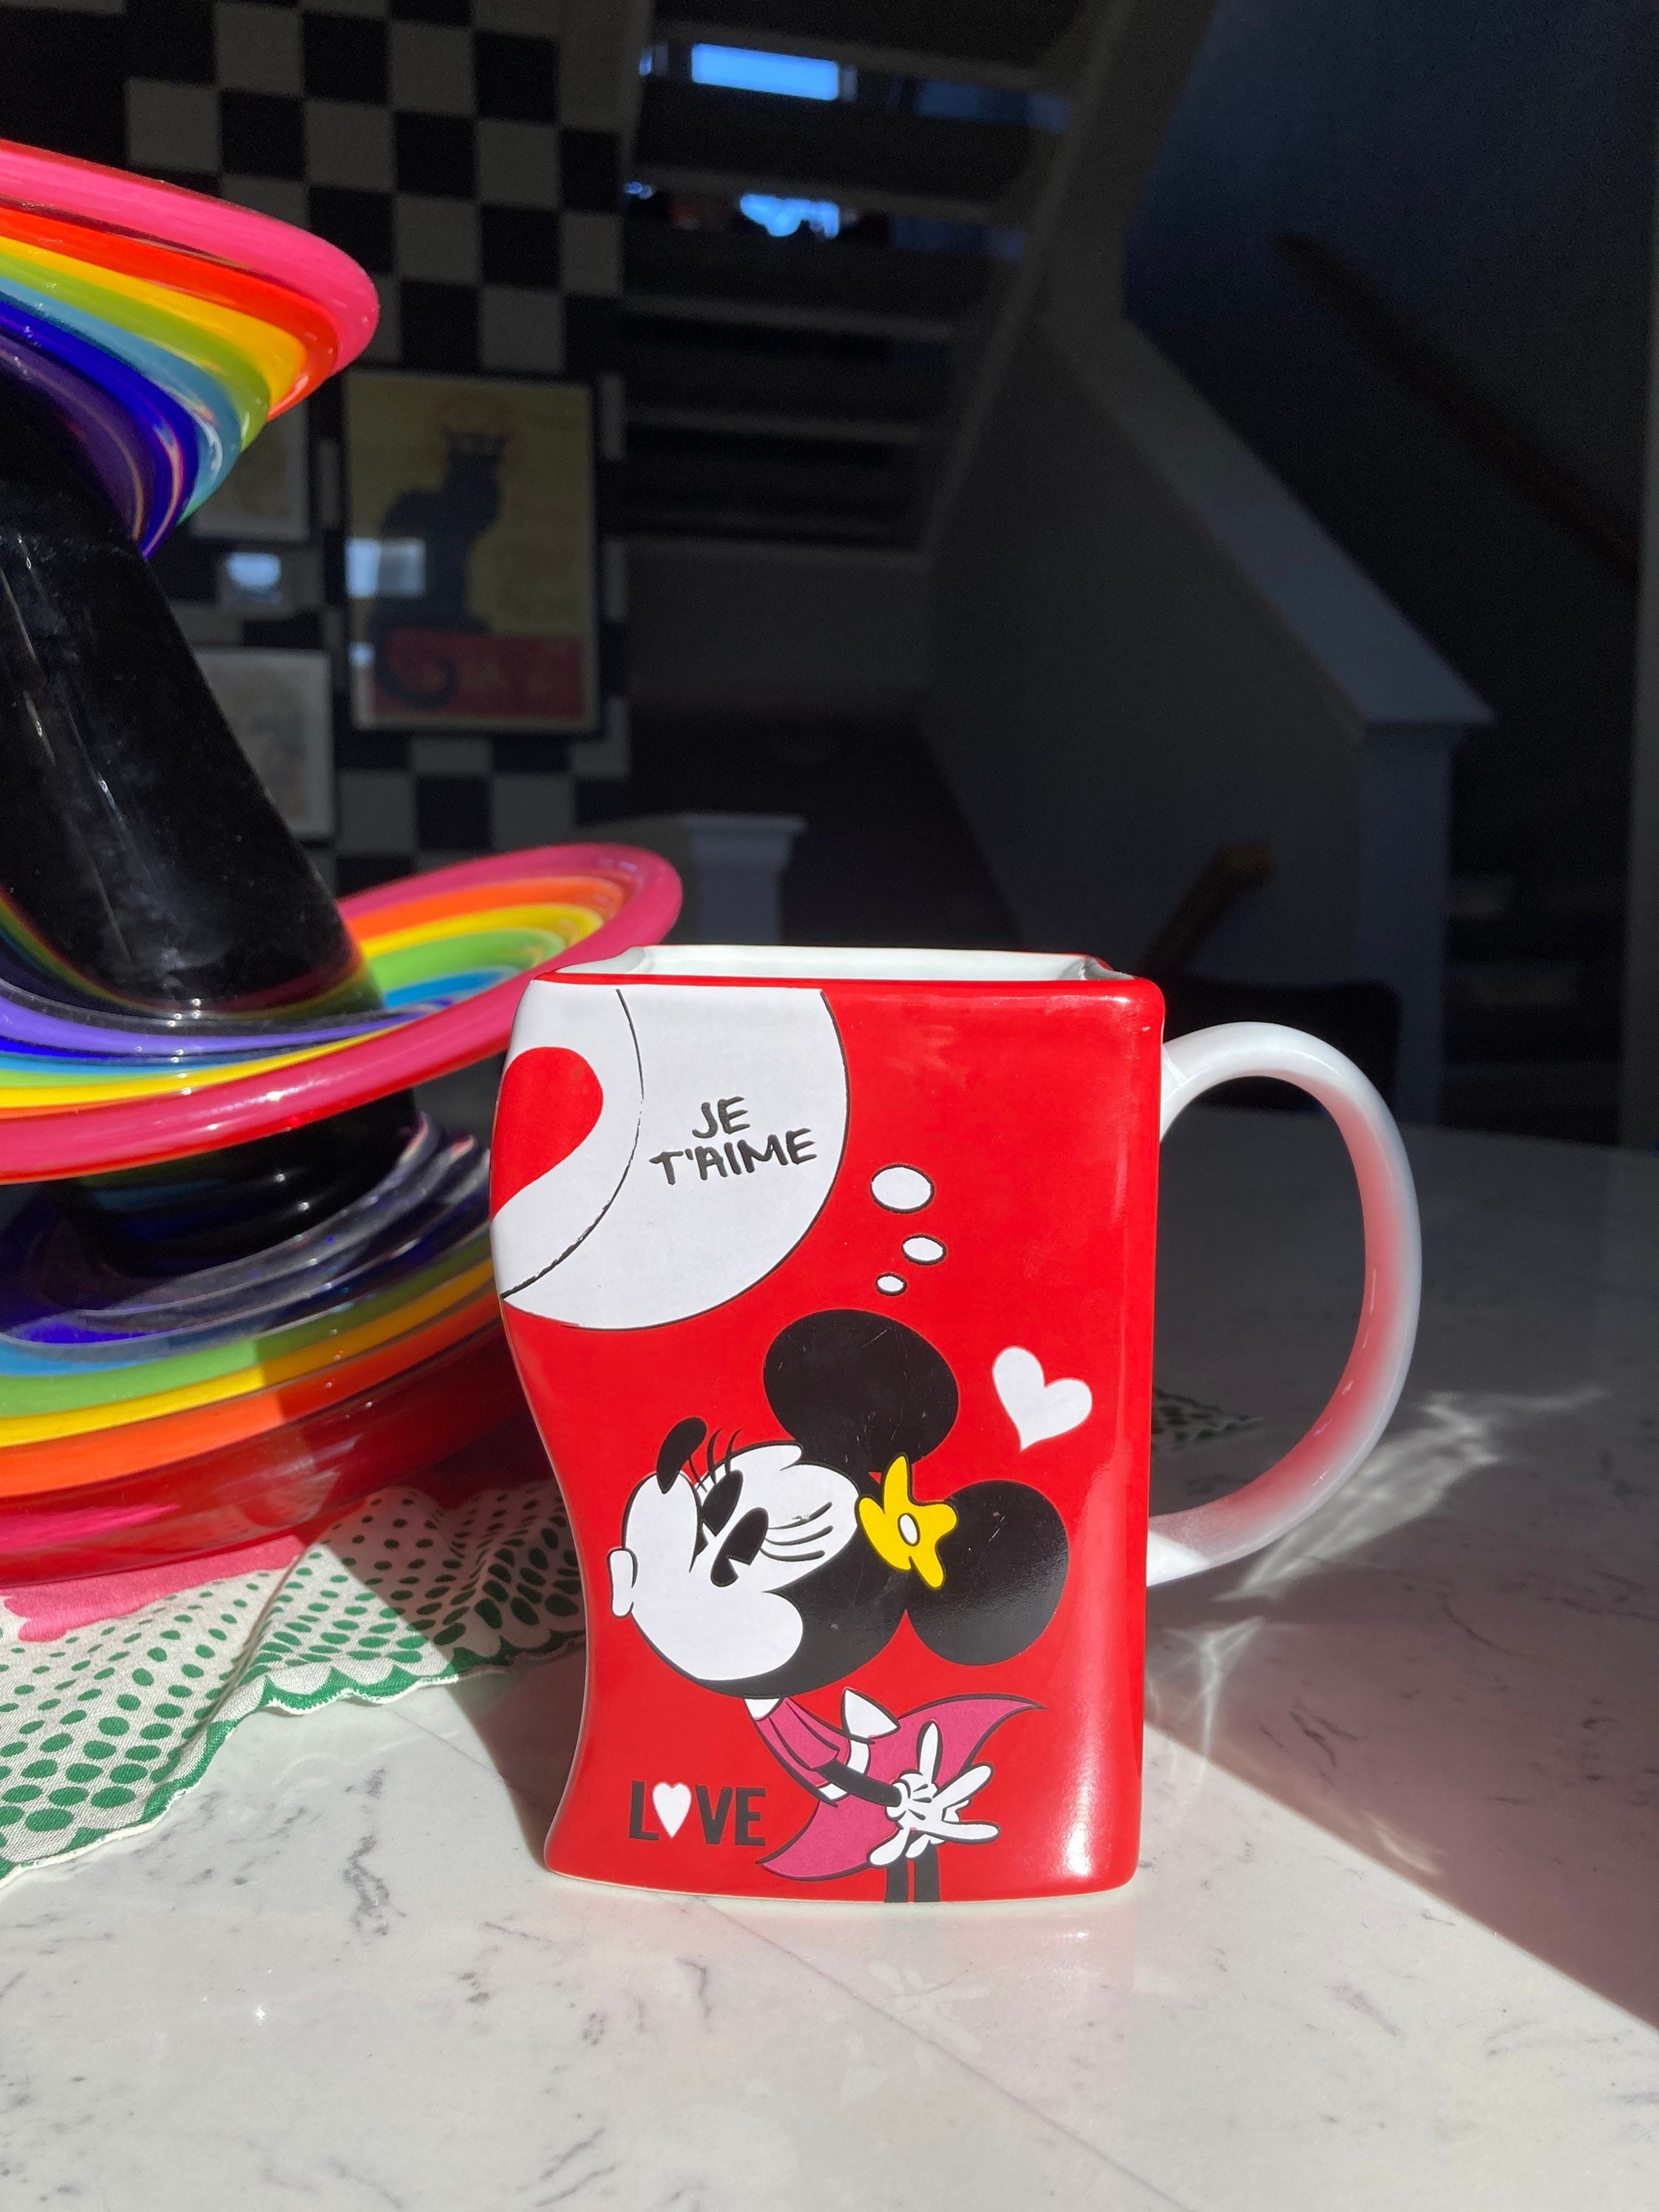 Disney Mickey Mouse Mug Warmer, Includes 12 oz Mickey Mouse Ceramic Mug,  New, Model DMP-16